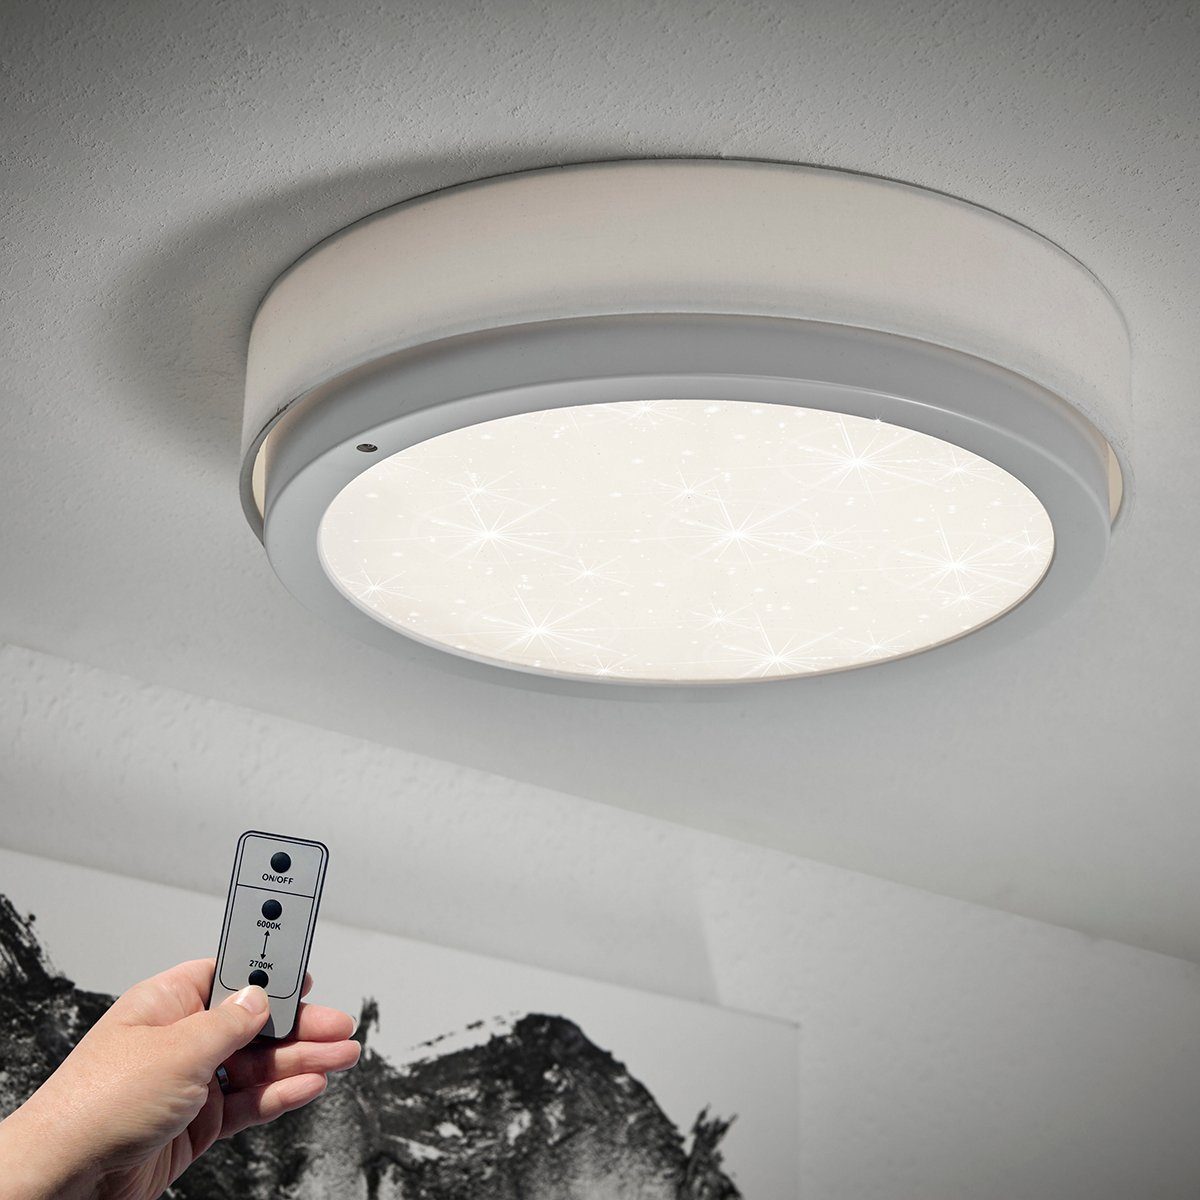 Deckenleuchte - LED Smart integriert, Home kaltweiß, 32x8 D112, Wand LED Deckenleuchte Leuchte warmweiß creme-weiß LED fest Wandlampe cm MeLiTec